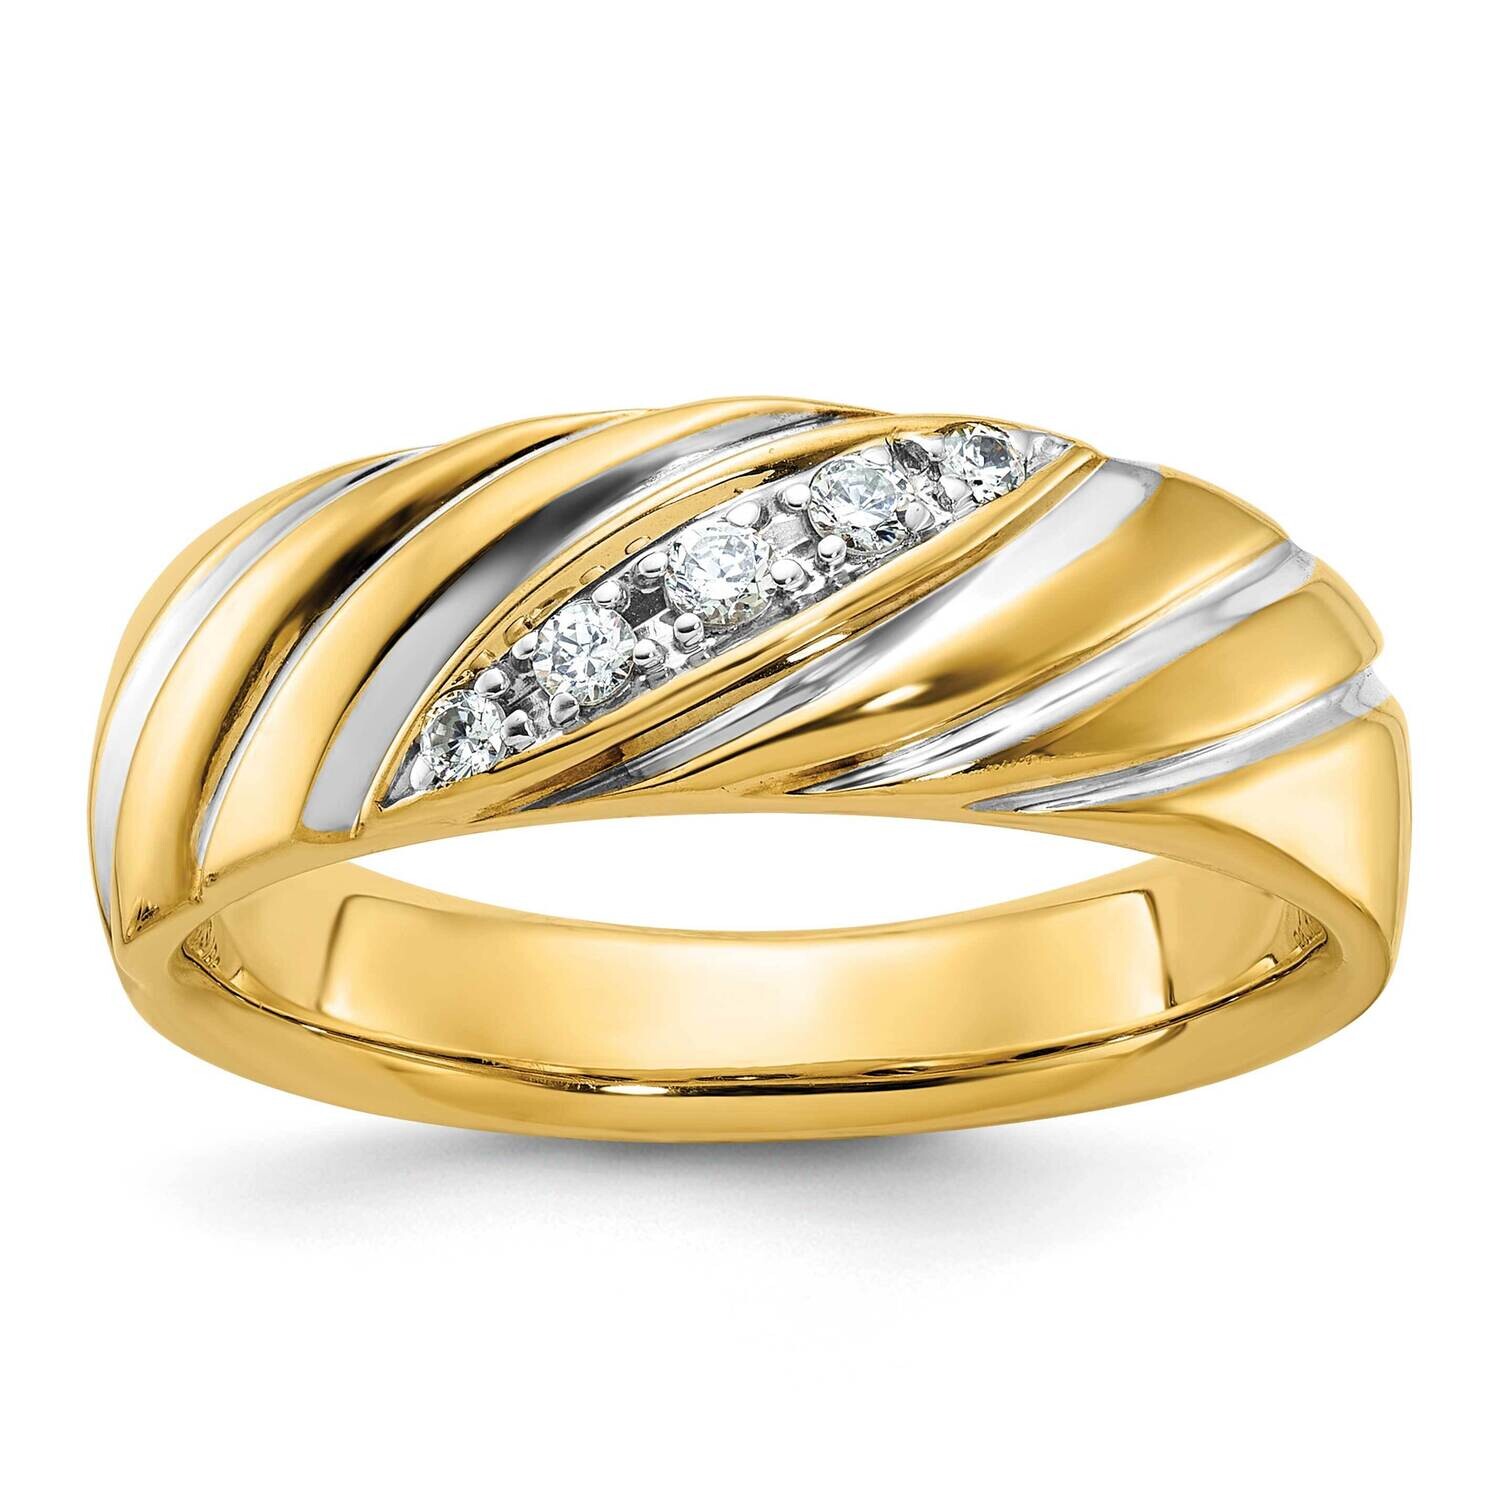 Ibgoodman Men's Polished Grooved 1/6 Carat Aa Quality Diamond Ring 14k Gold White Rhodium B63242-4YAA